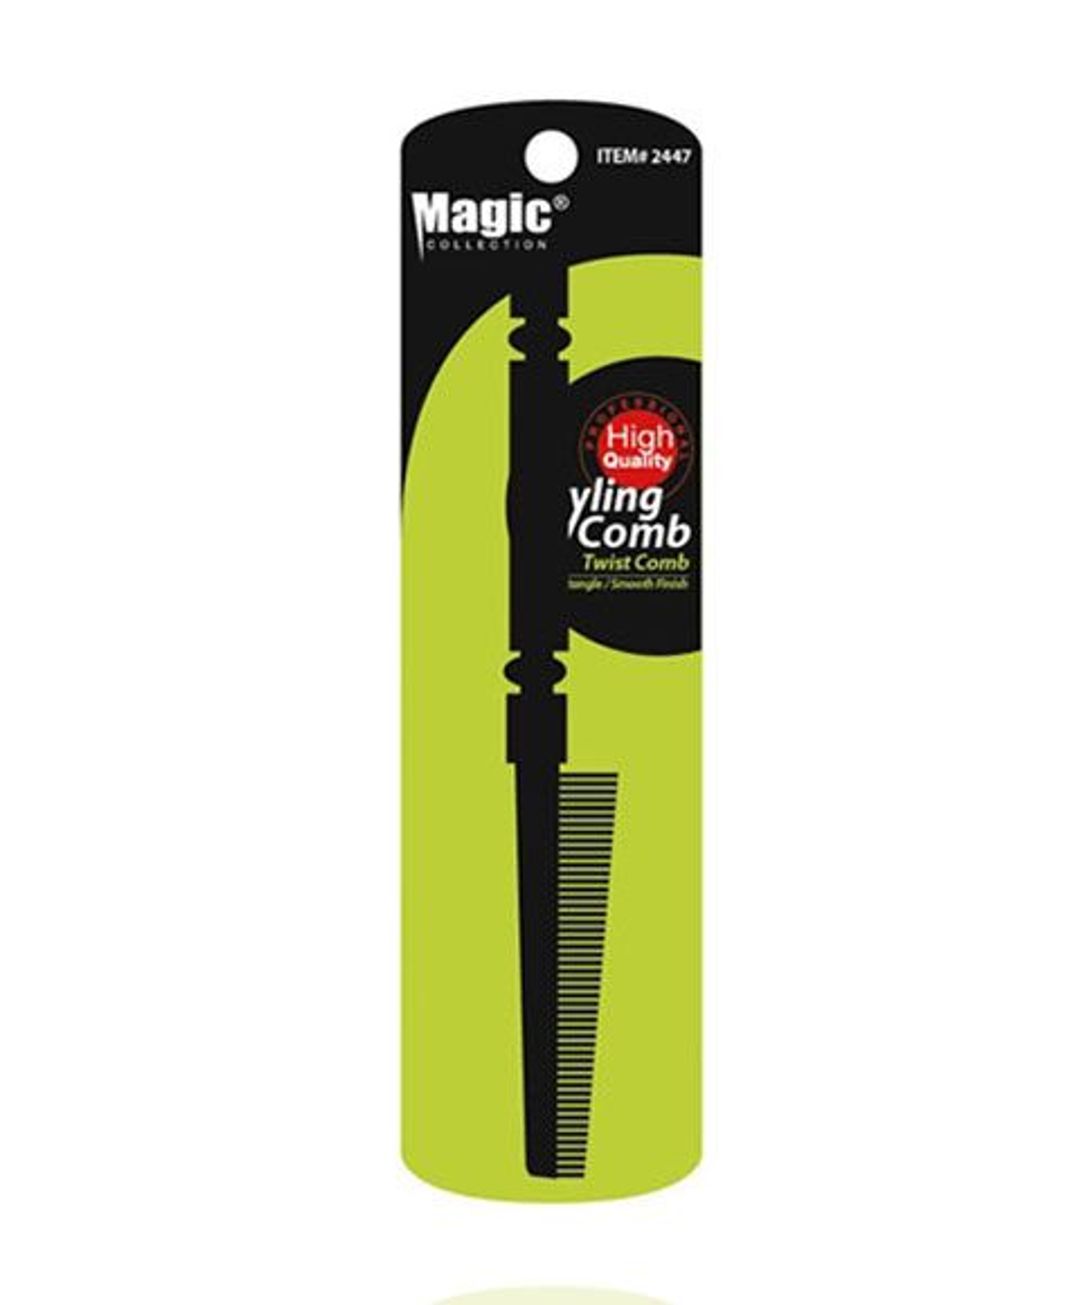 Magic Collection Twist Comb - 2447